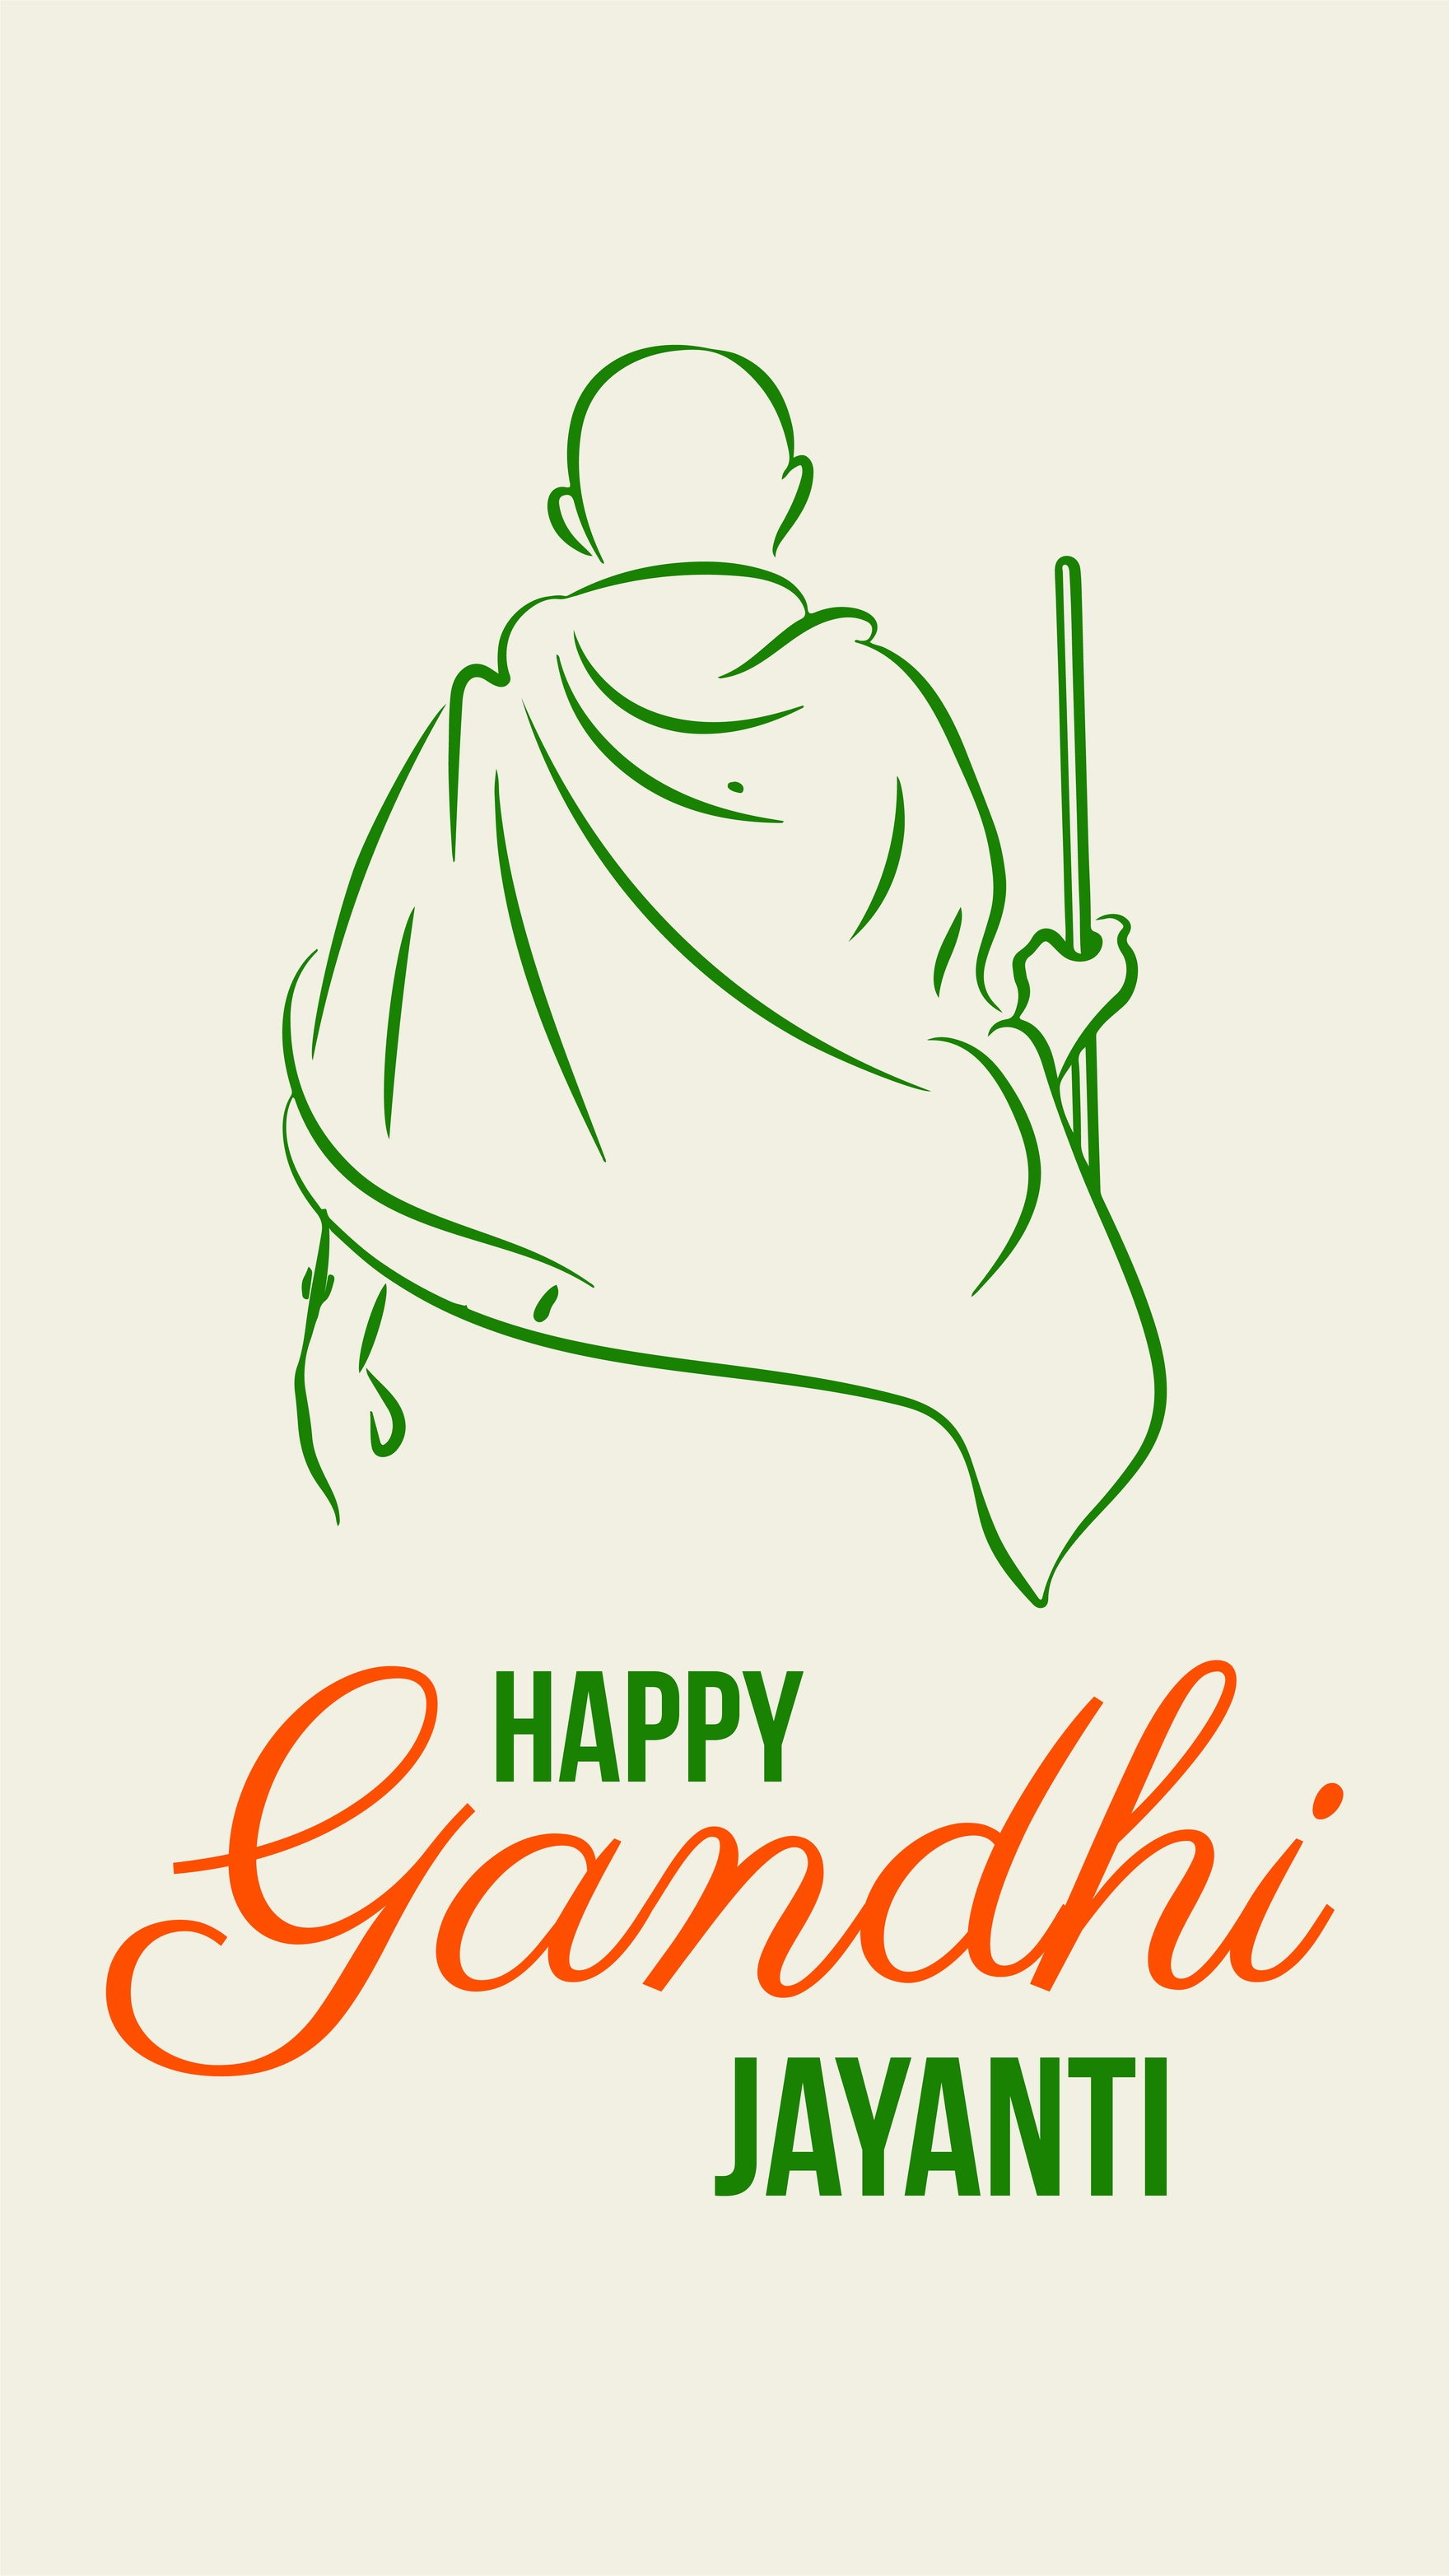 Gandhi Jayanti iPhone Background